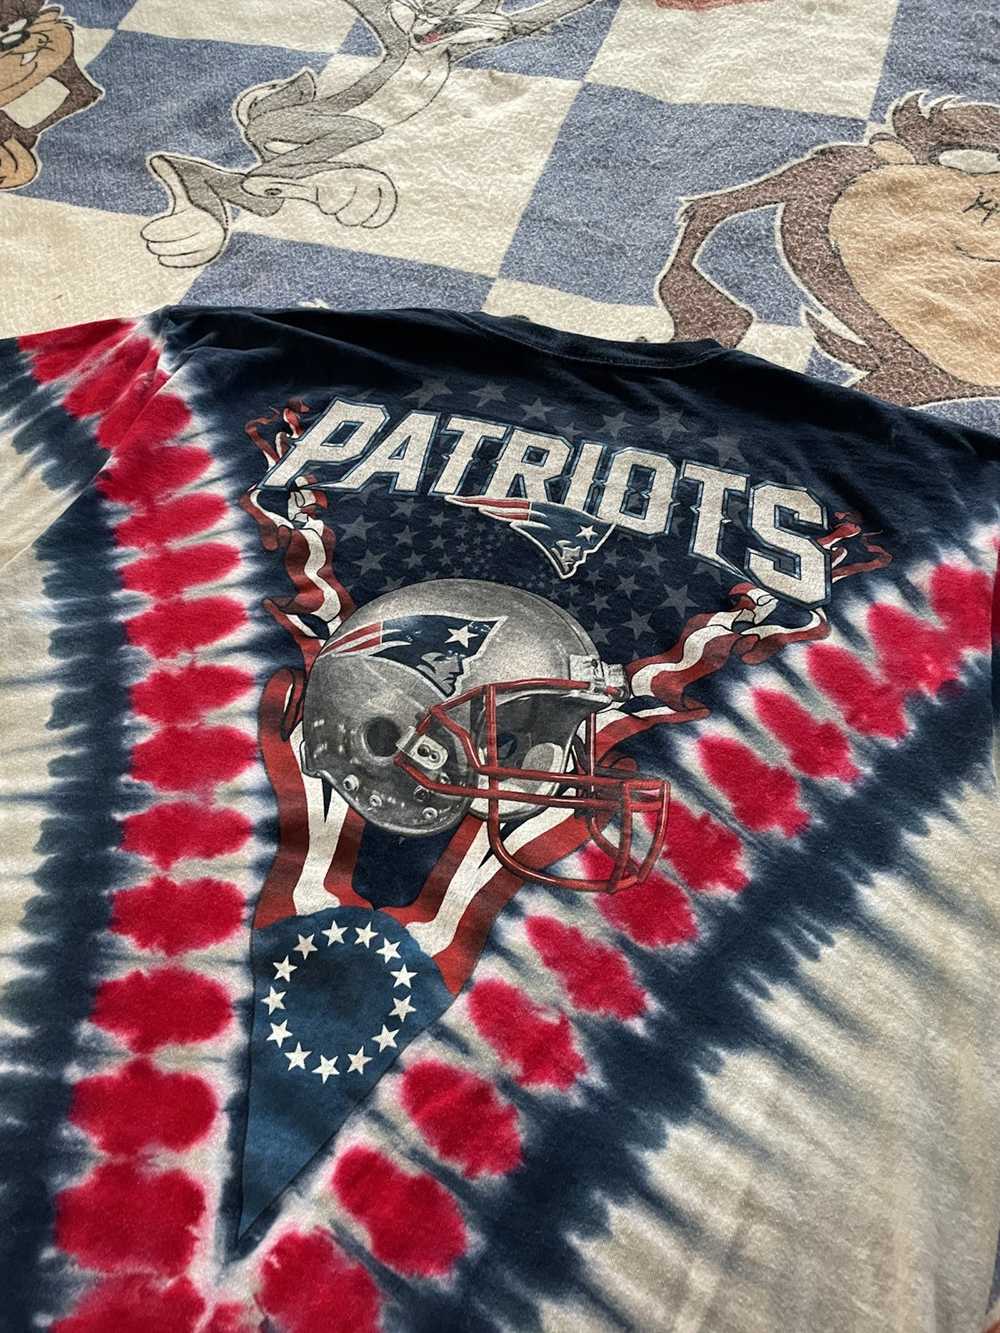 NFL New England patriots tie dye tee - image 4